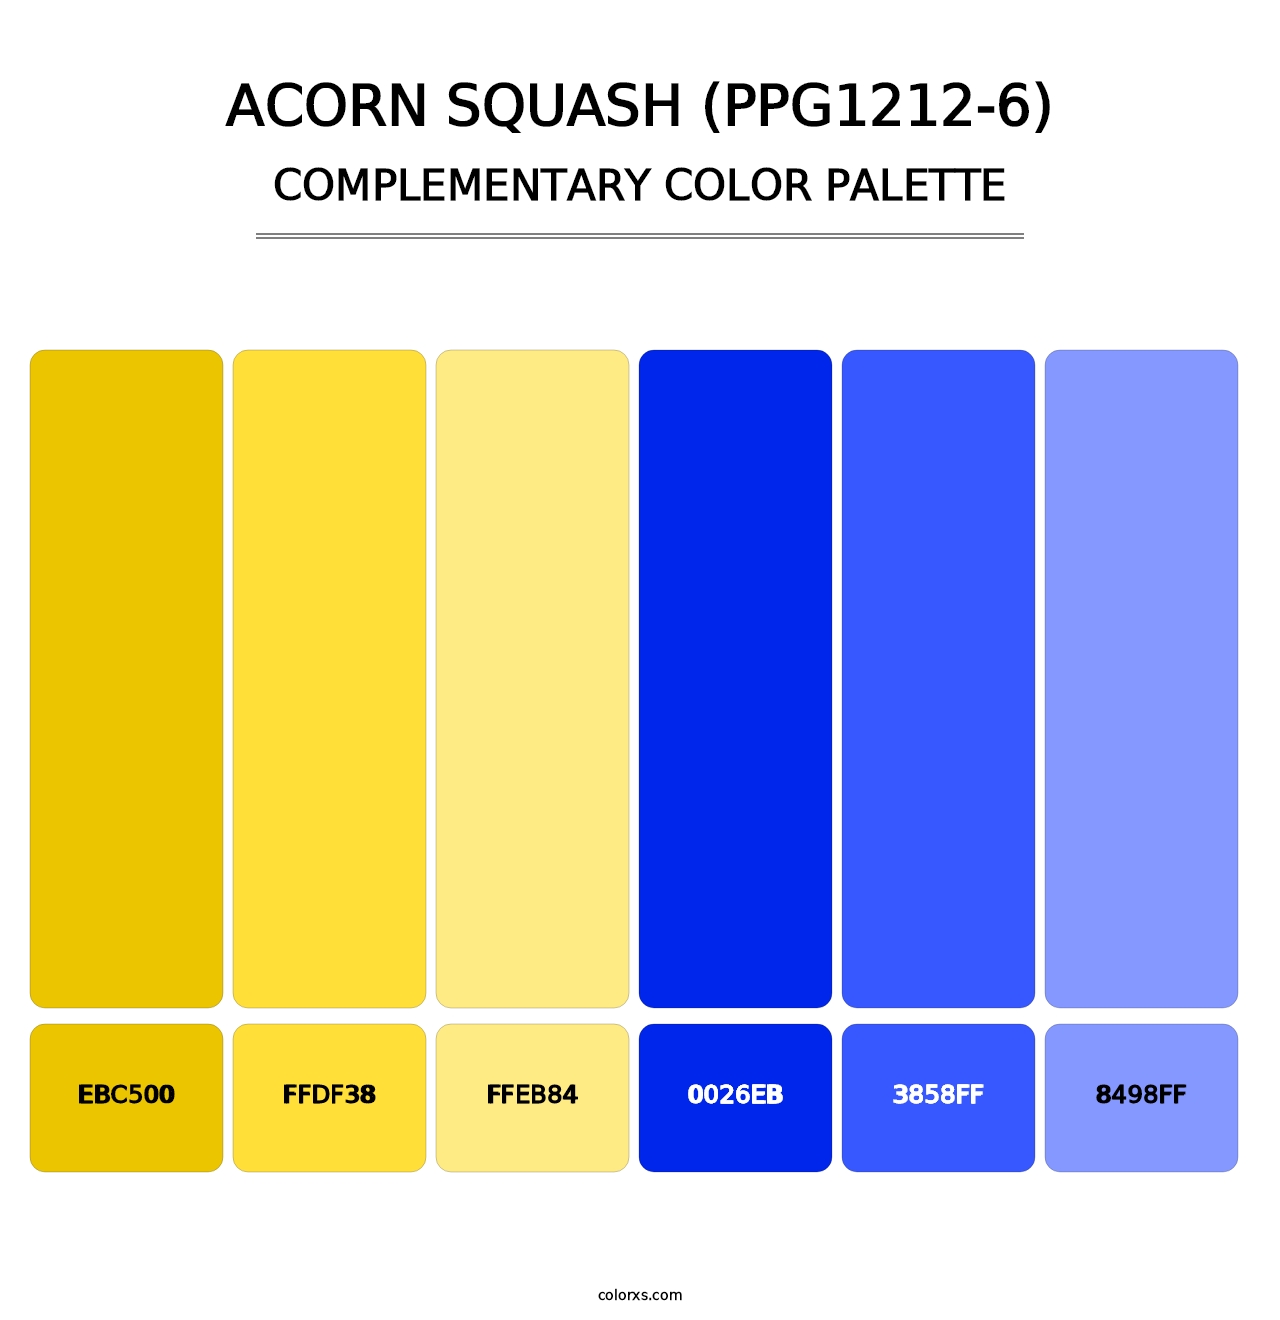 Acorn Squash (PPG1212-6) - Complementary Color Palette